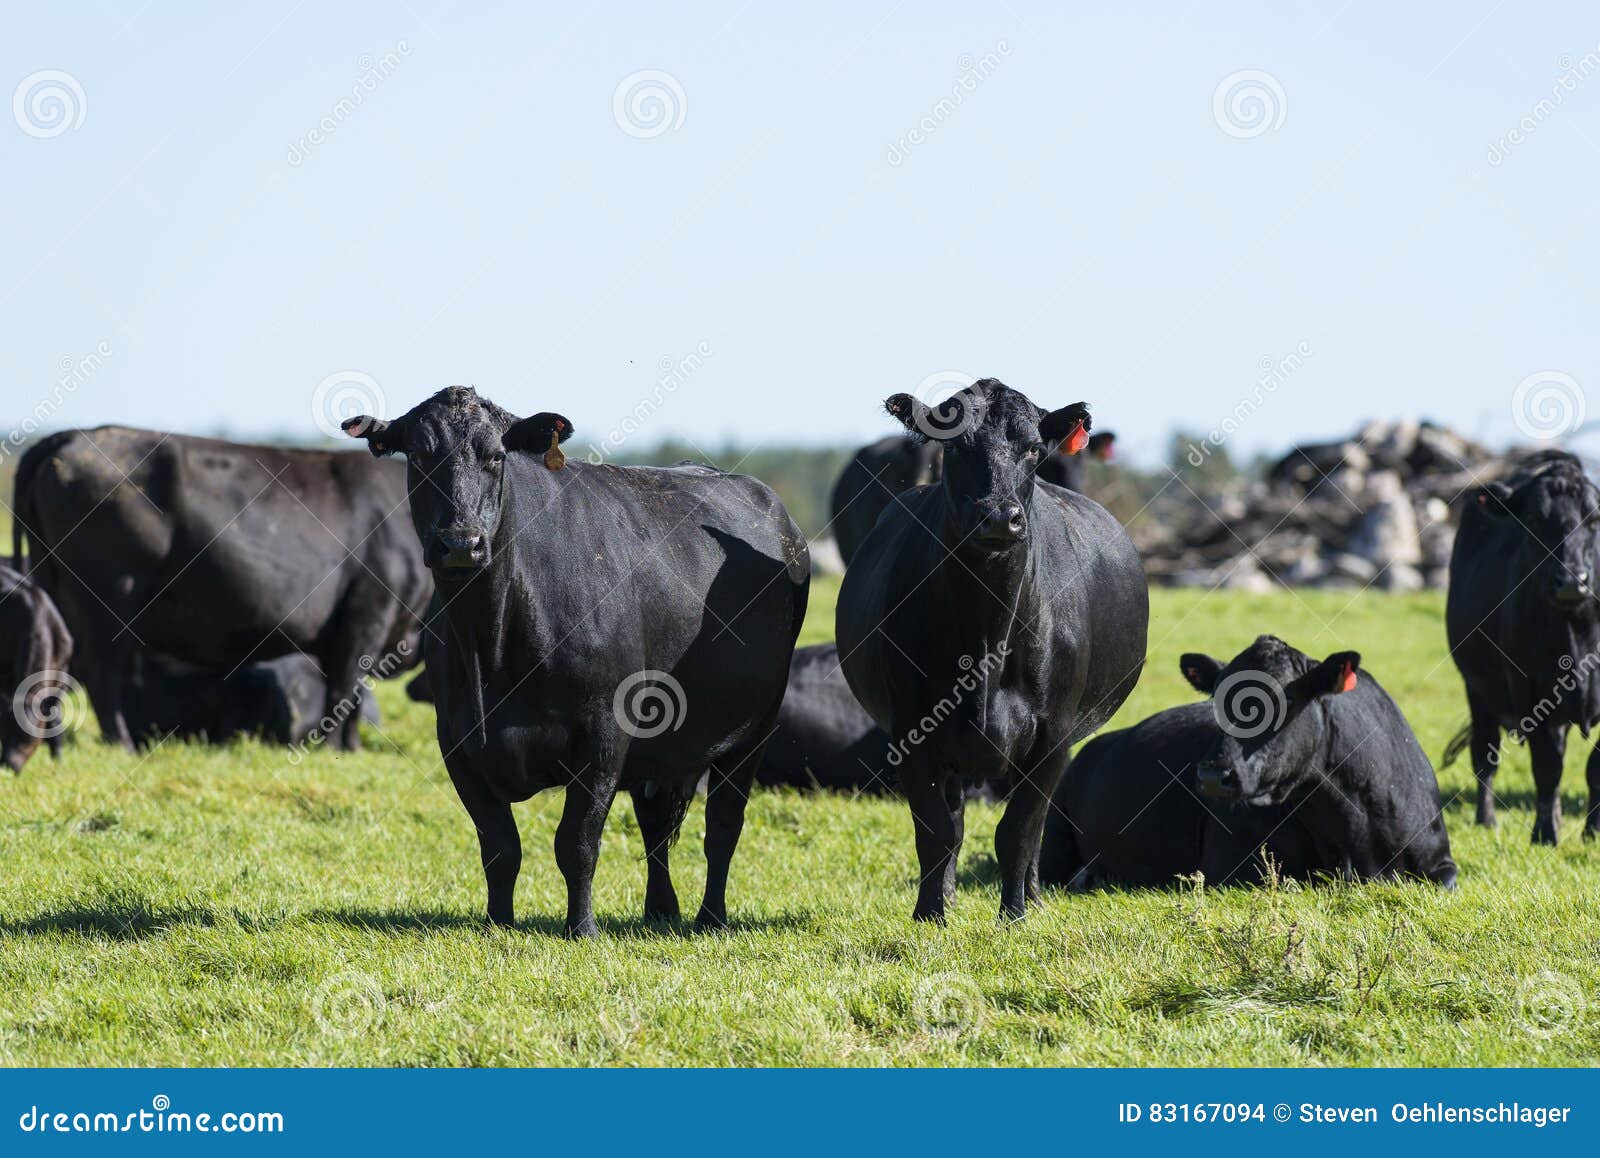 black angus cows